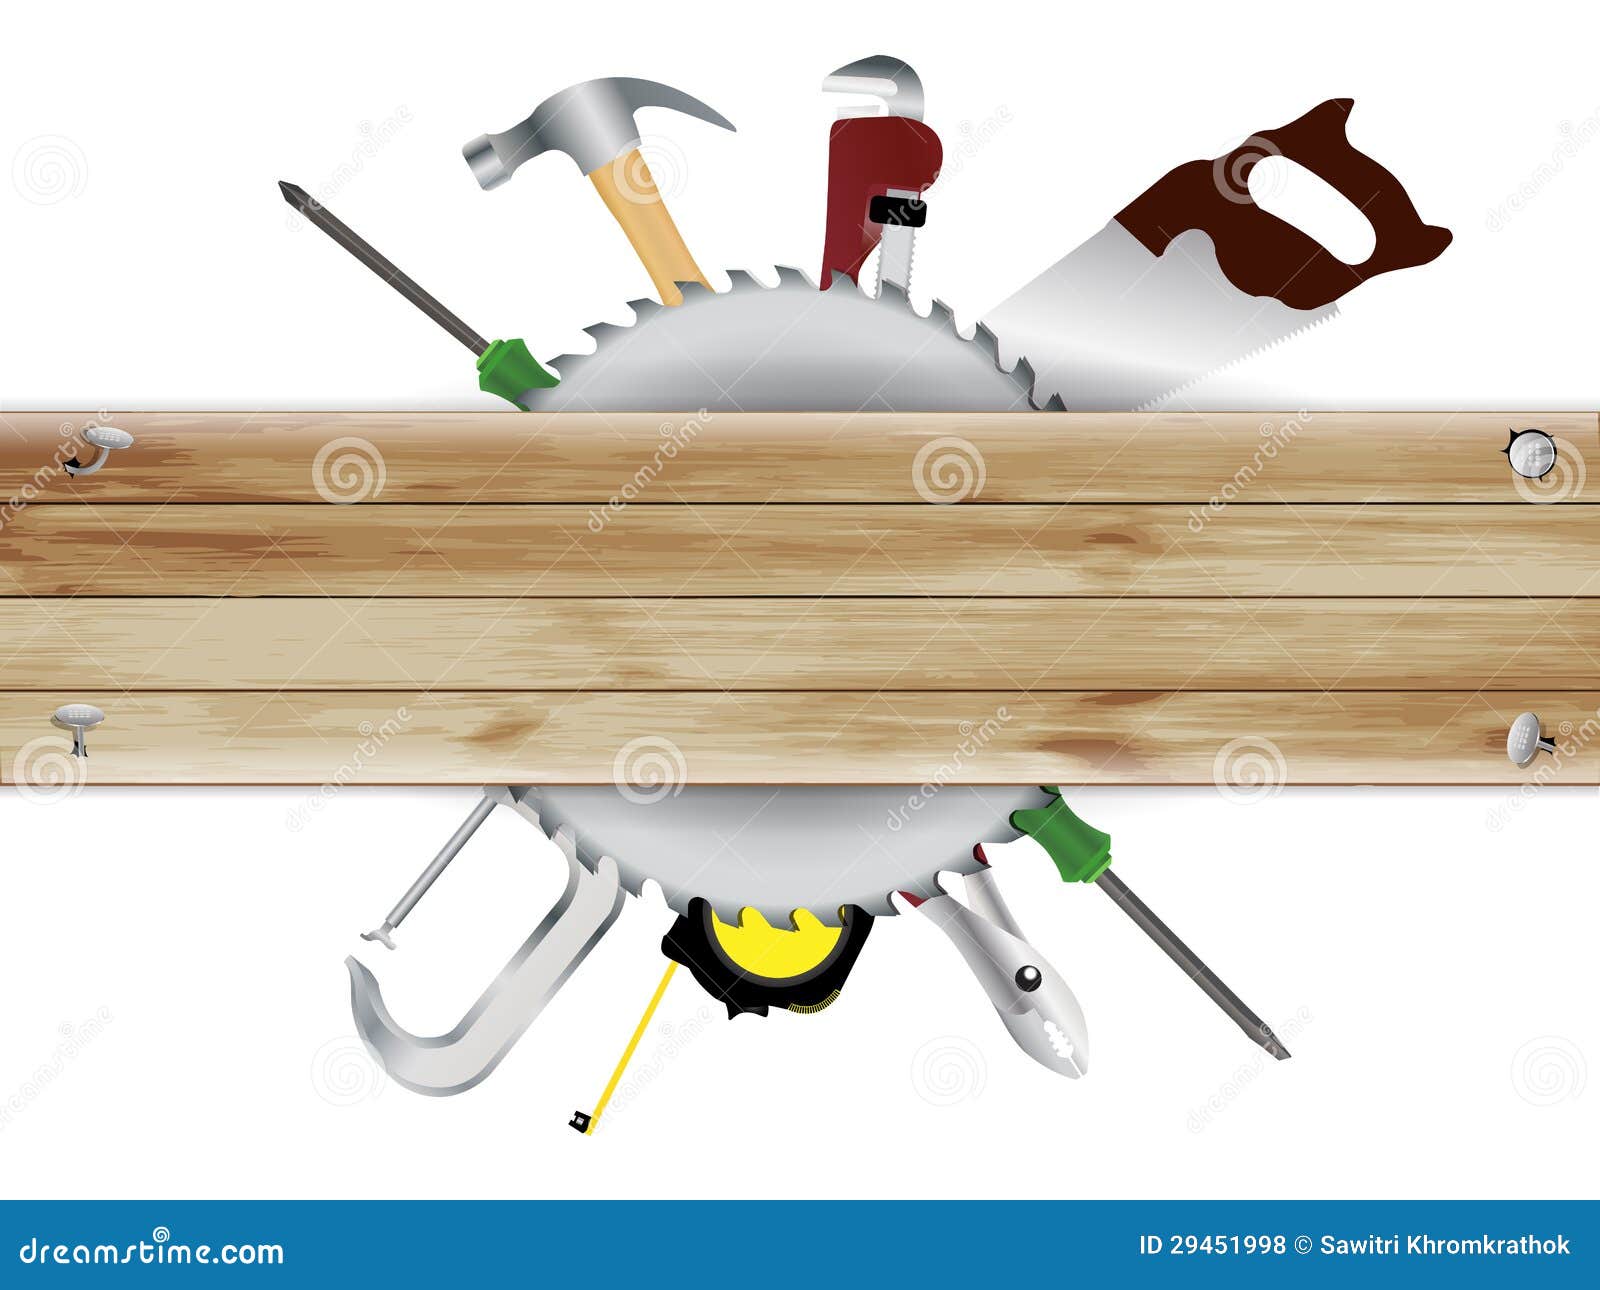 free clipart carpenter tools - photo #32